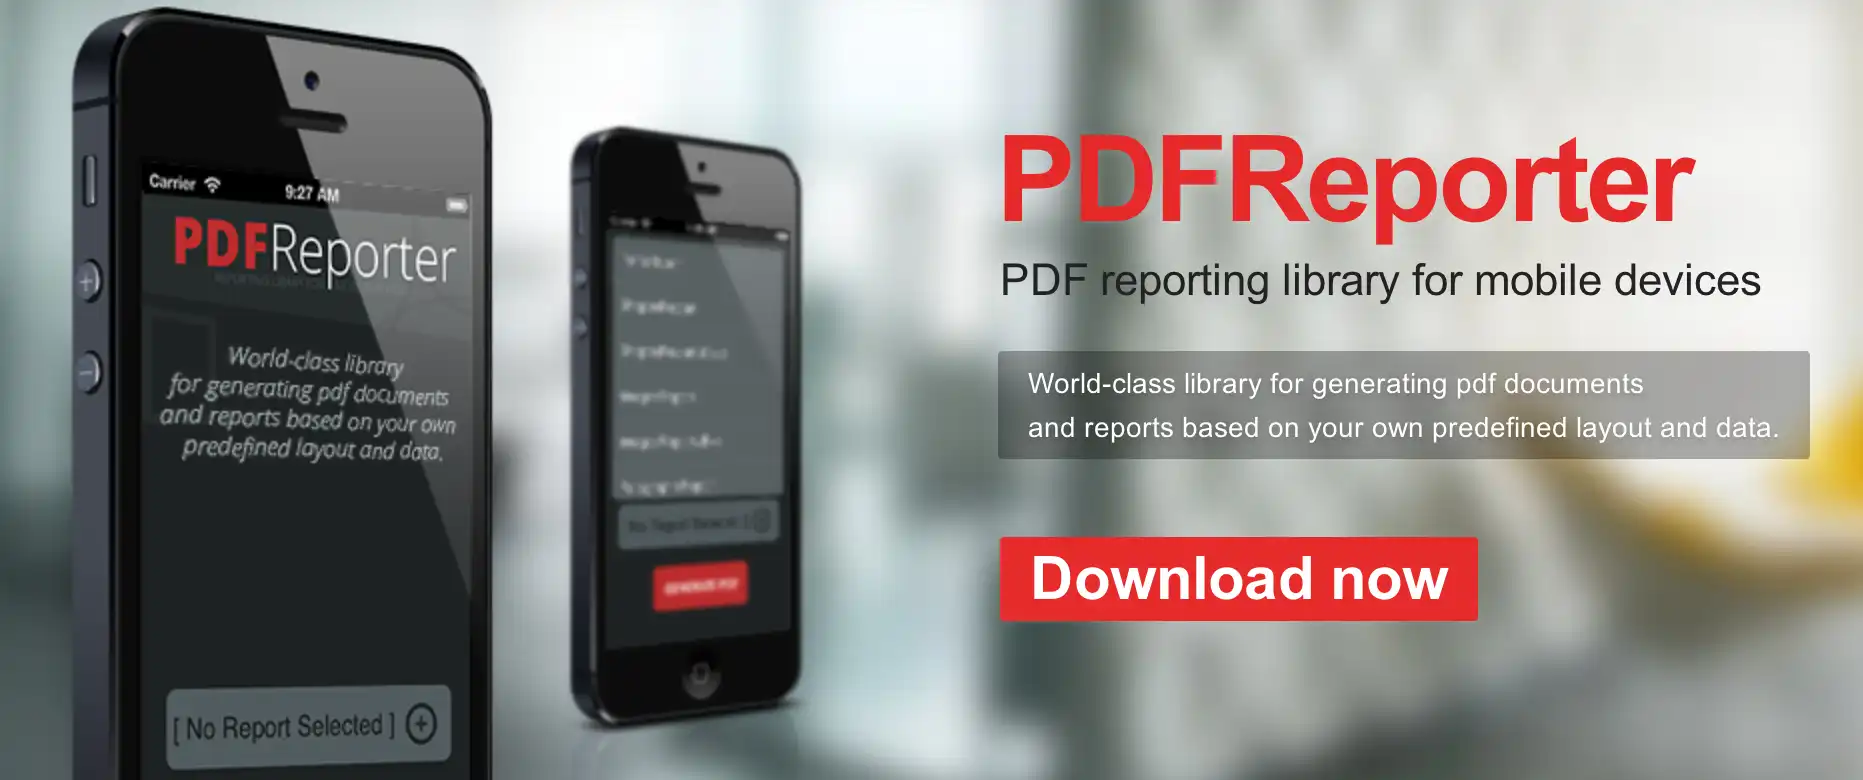 Baixe a ferramenta da web ou o aplicativo da web PDFReporter